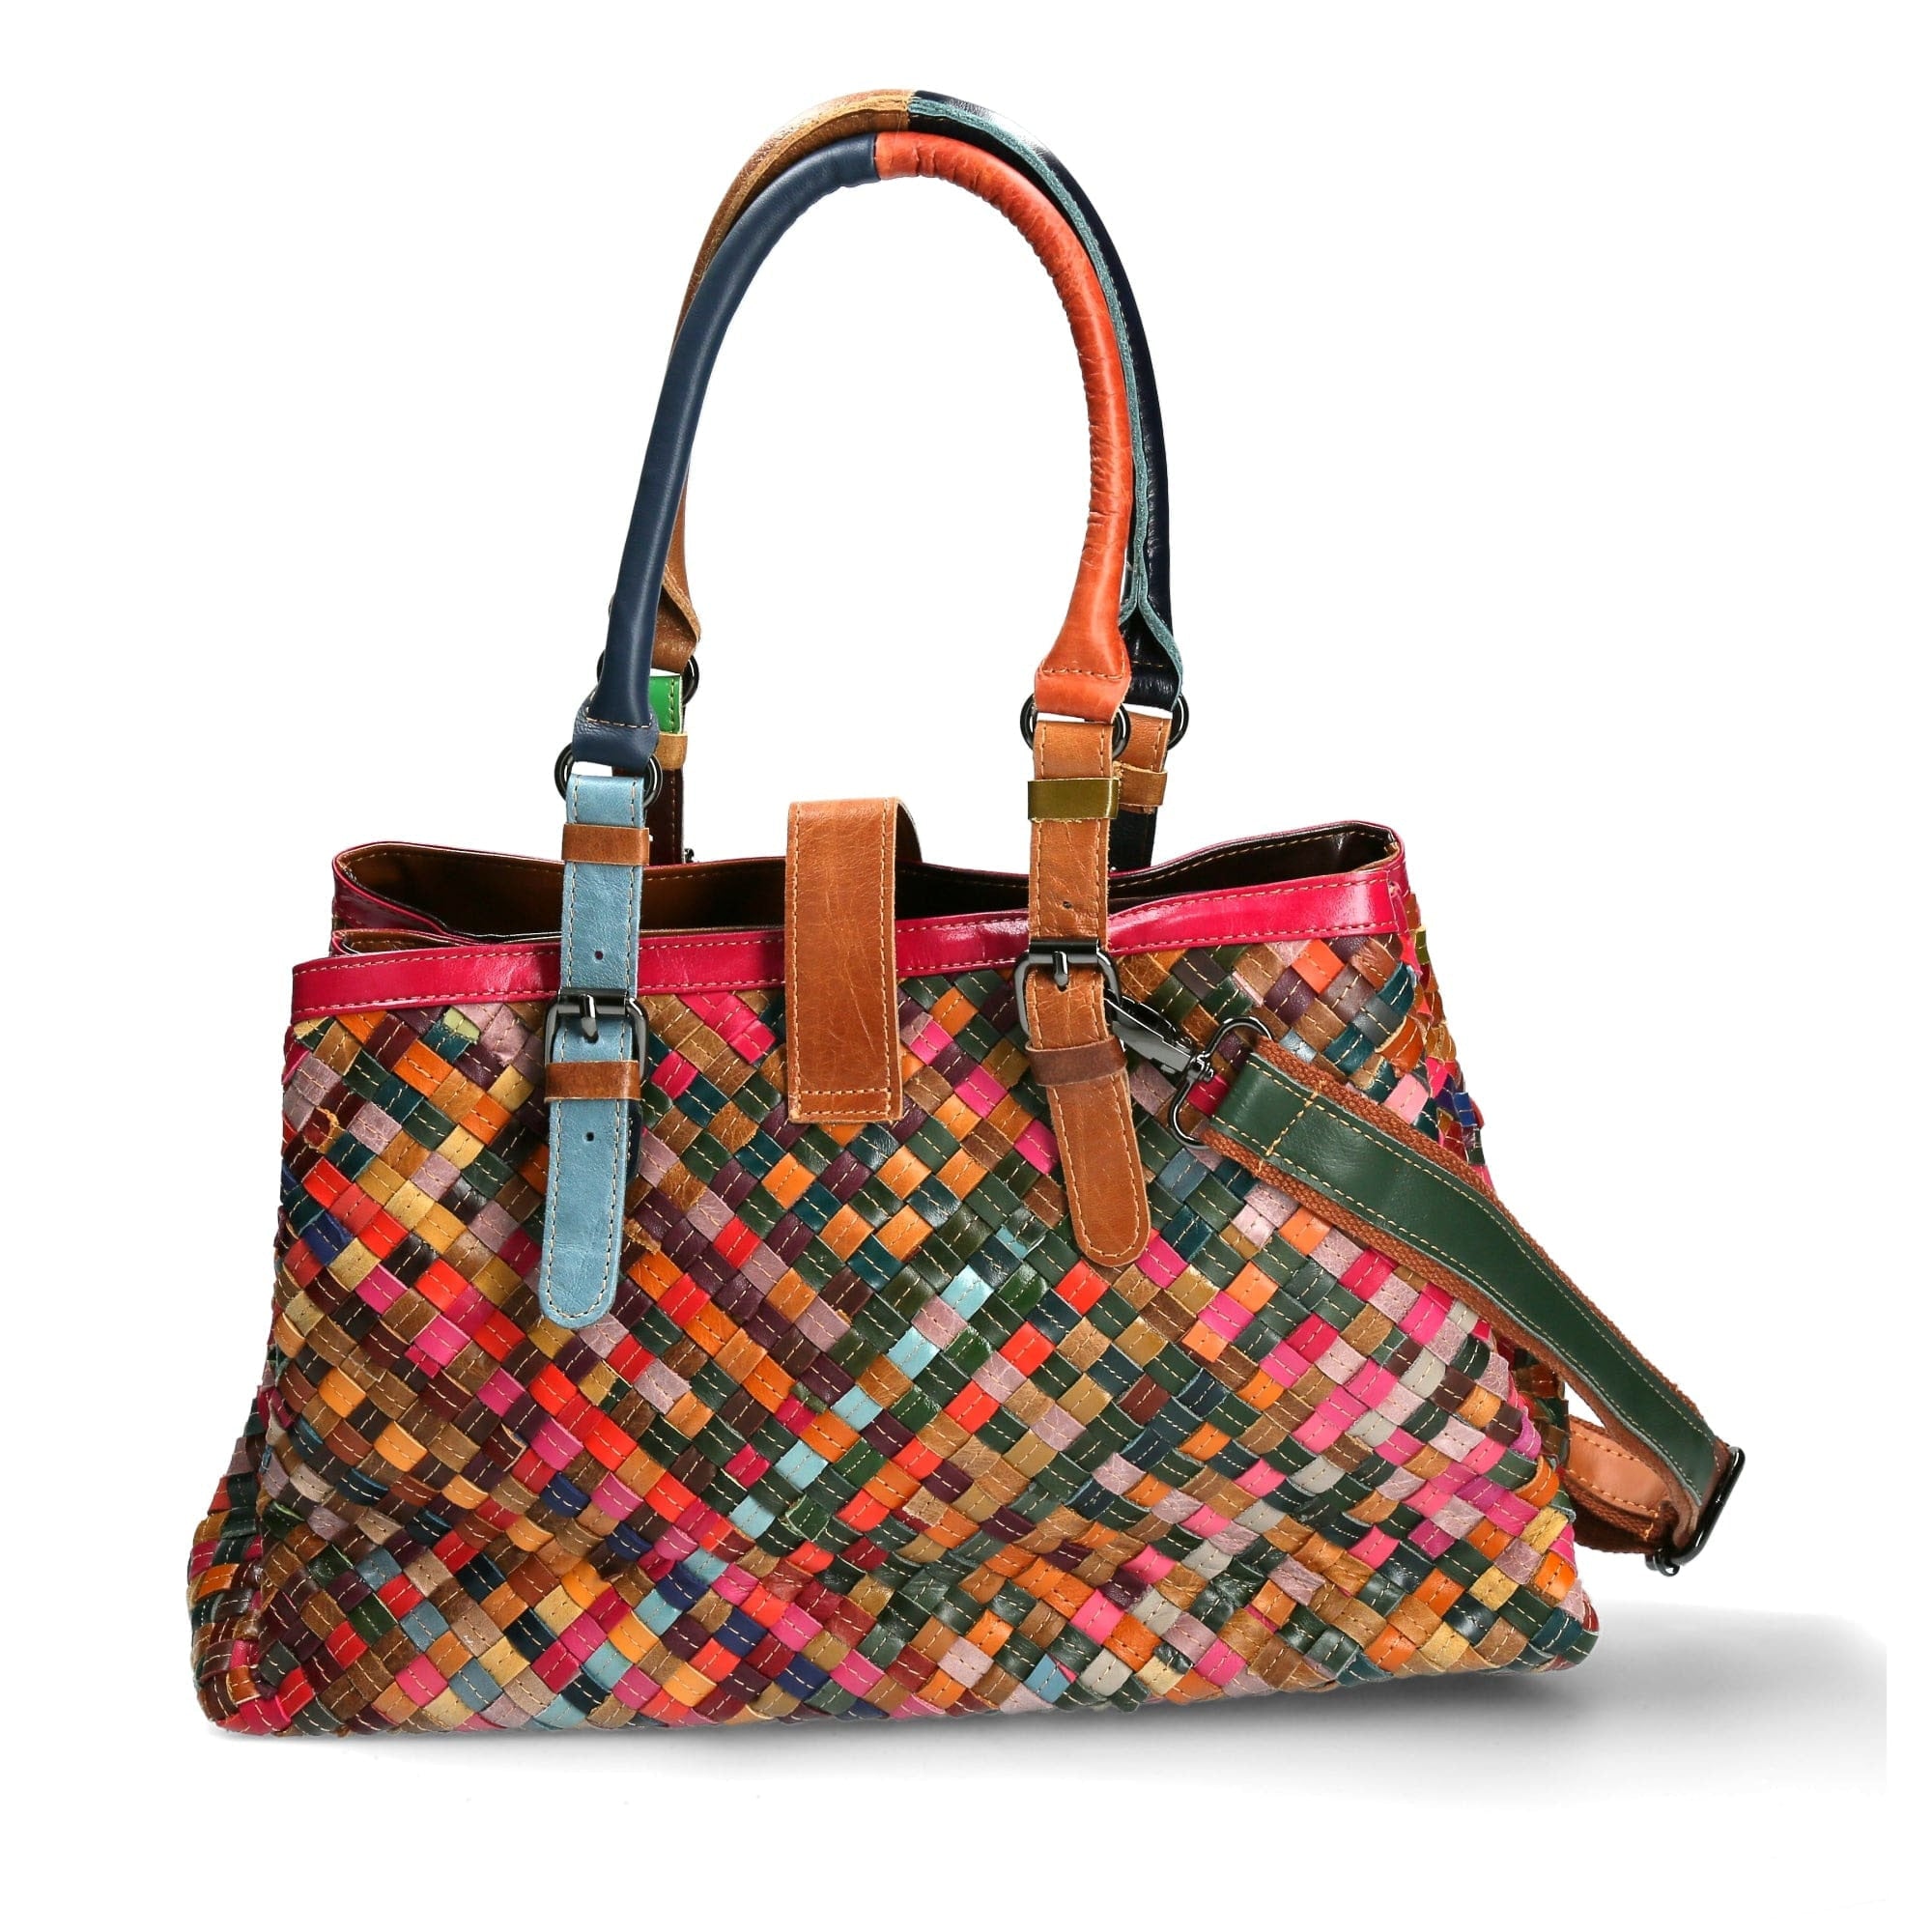 Exclusive Odila leather bag - Bag